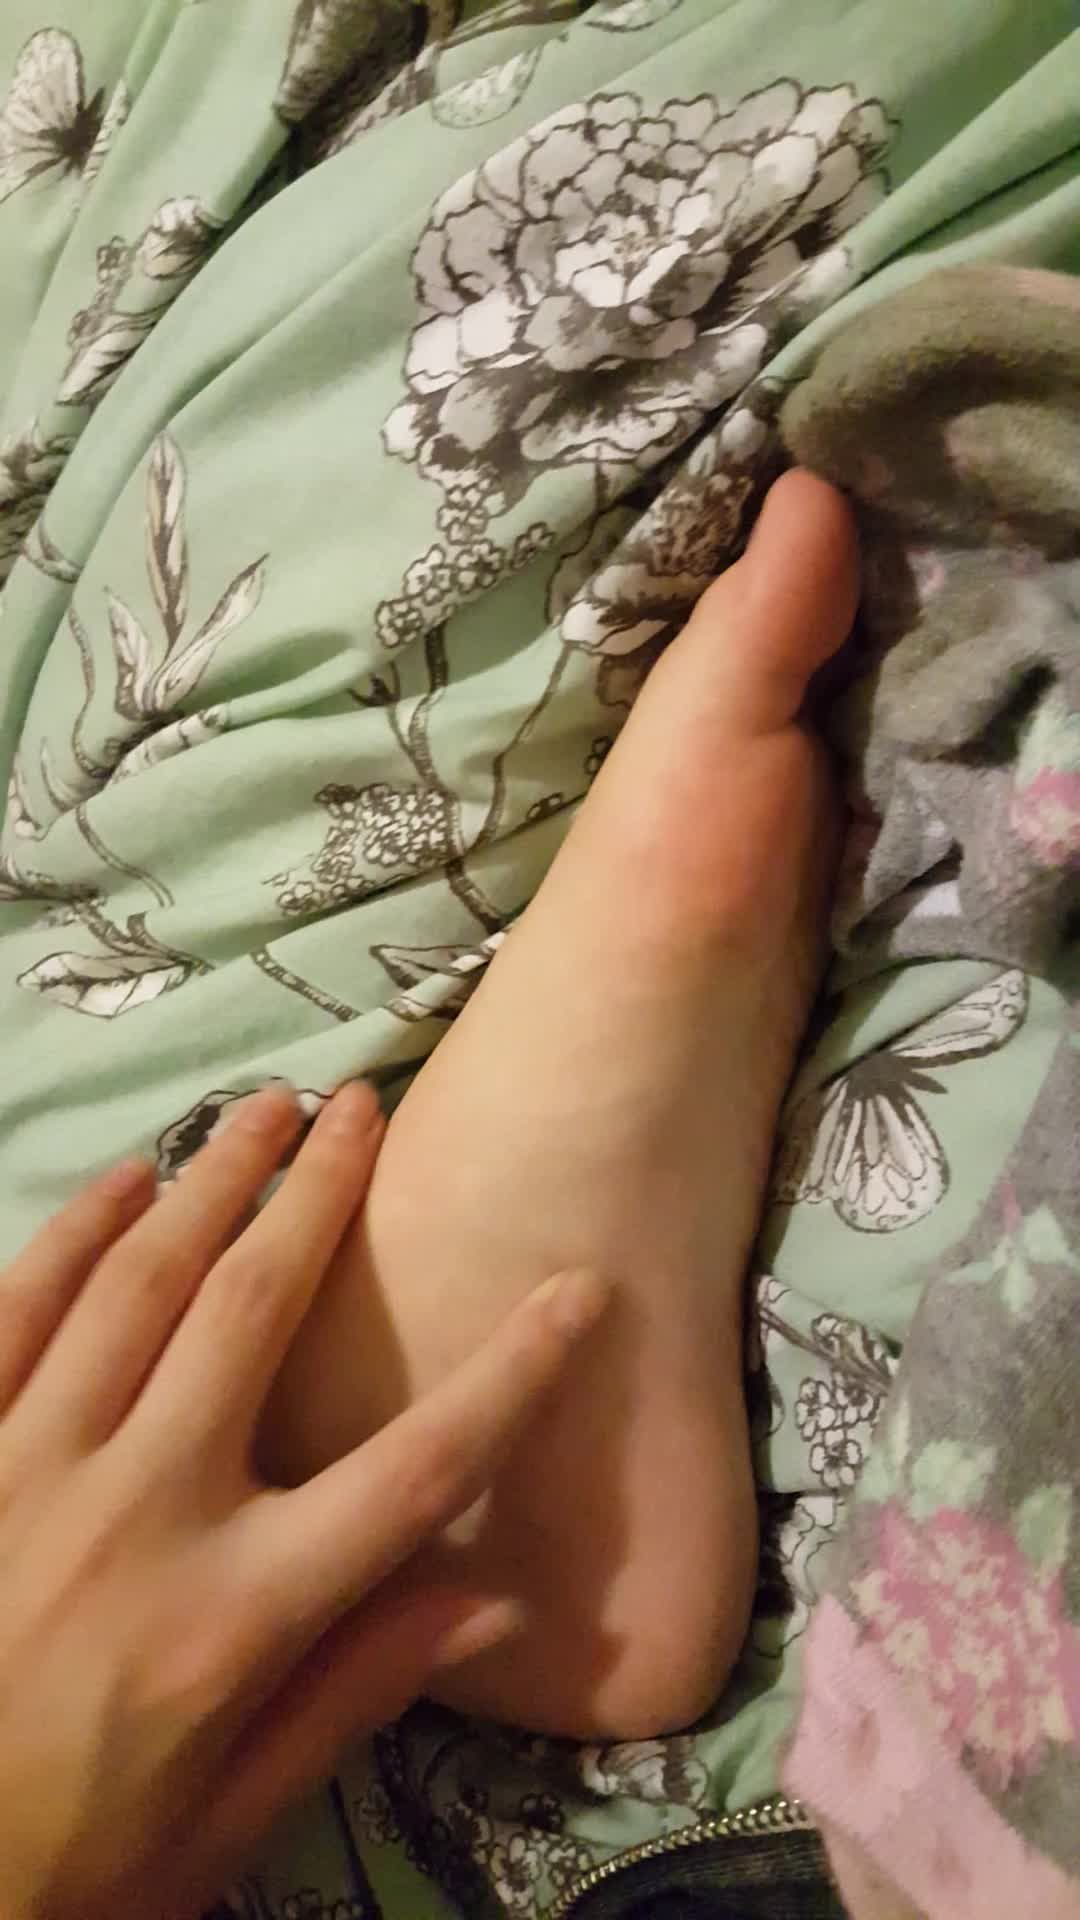 First Video Feet Rubbing